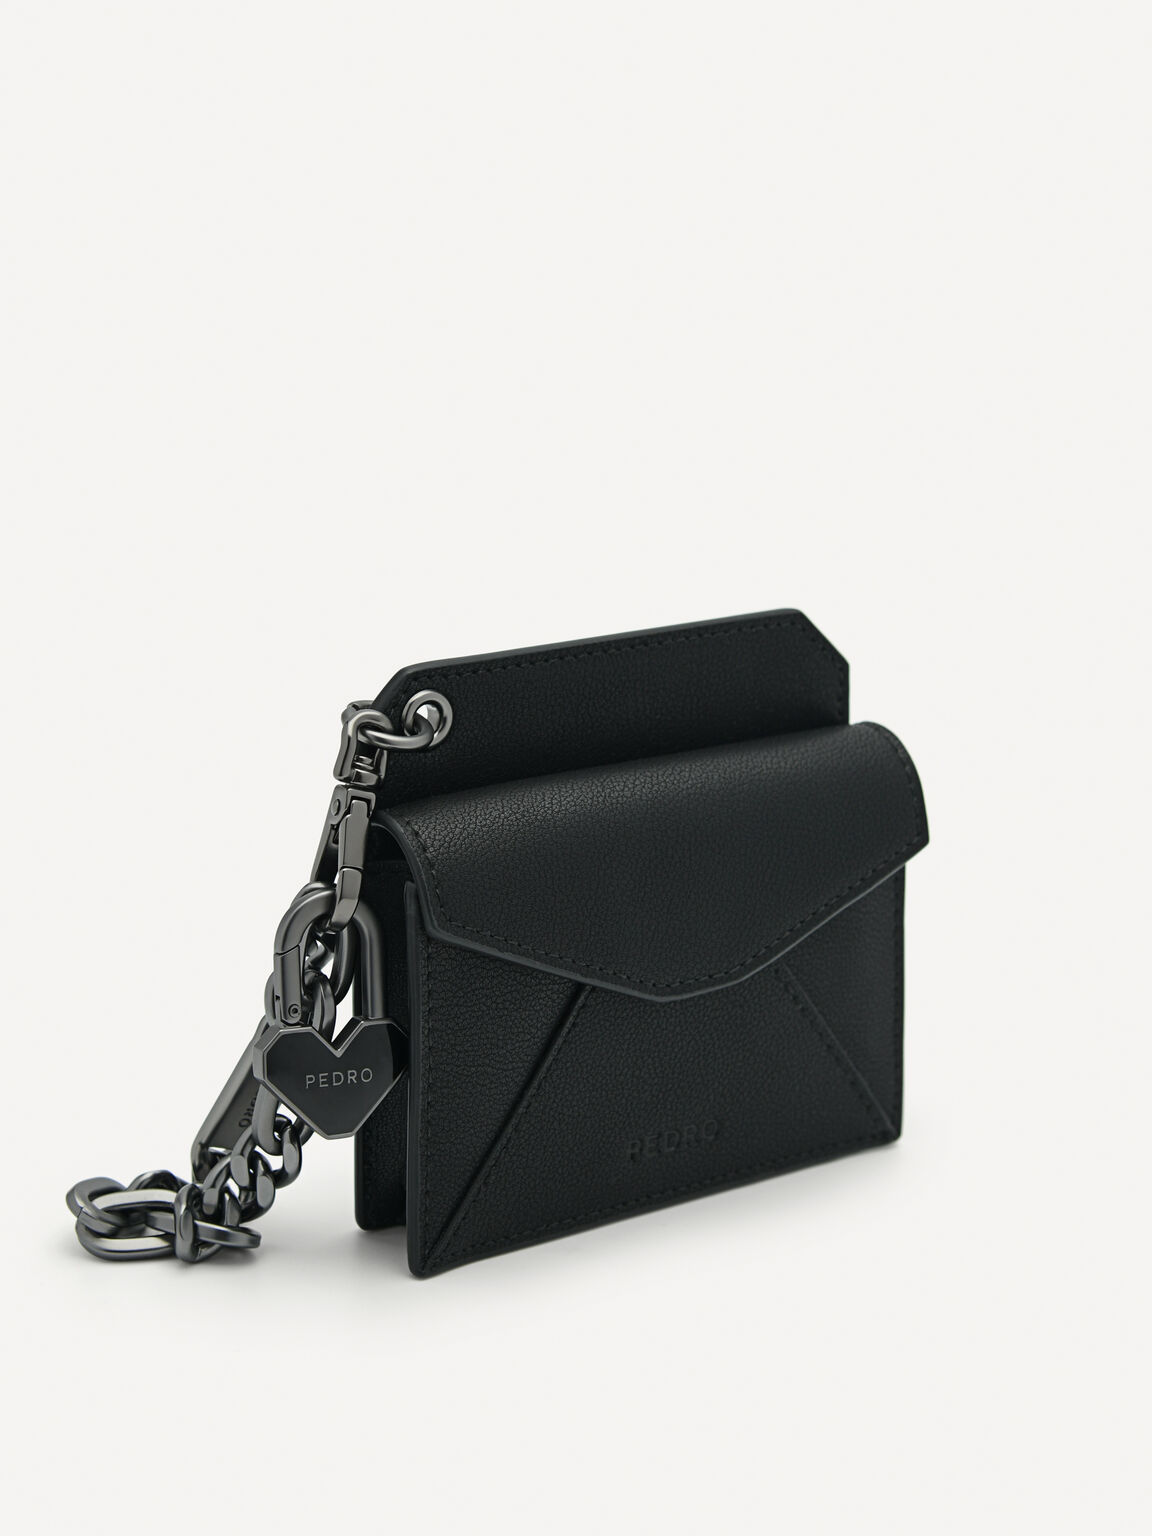 Leather Bi-Fold Card Holder with Key Chain, Black